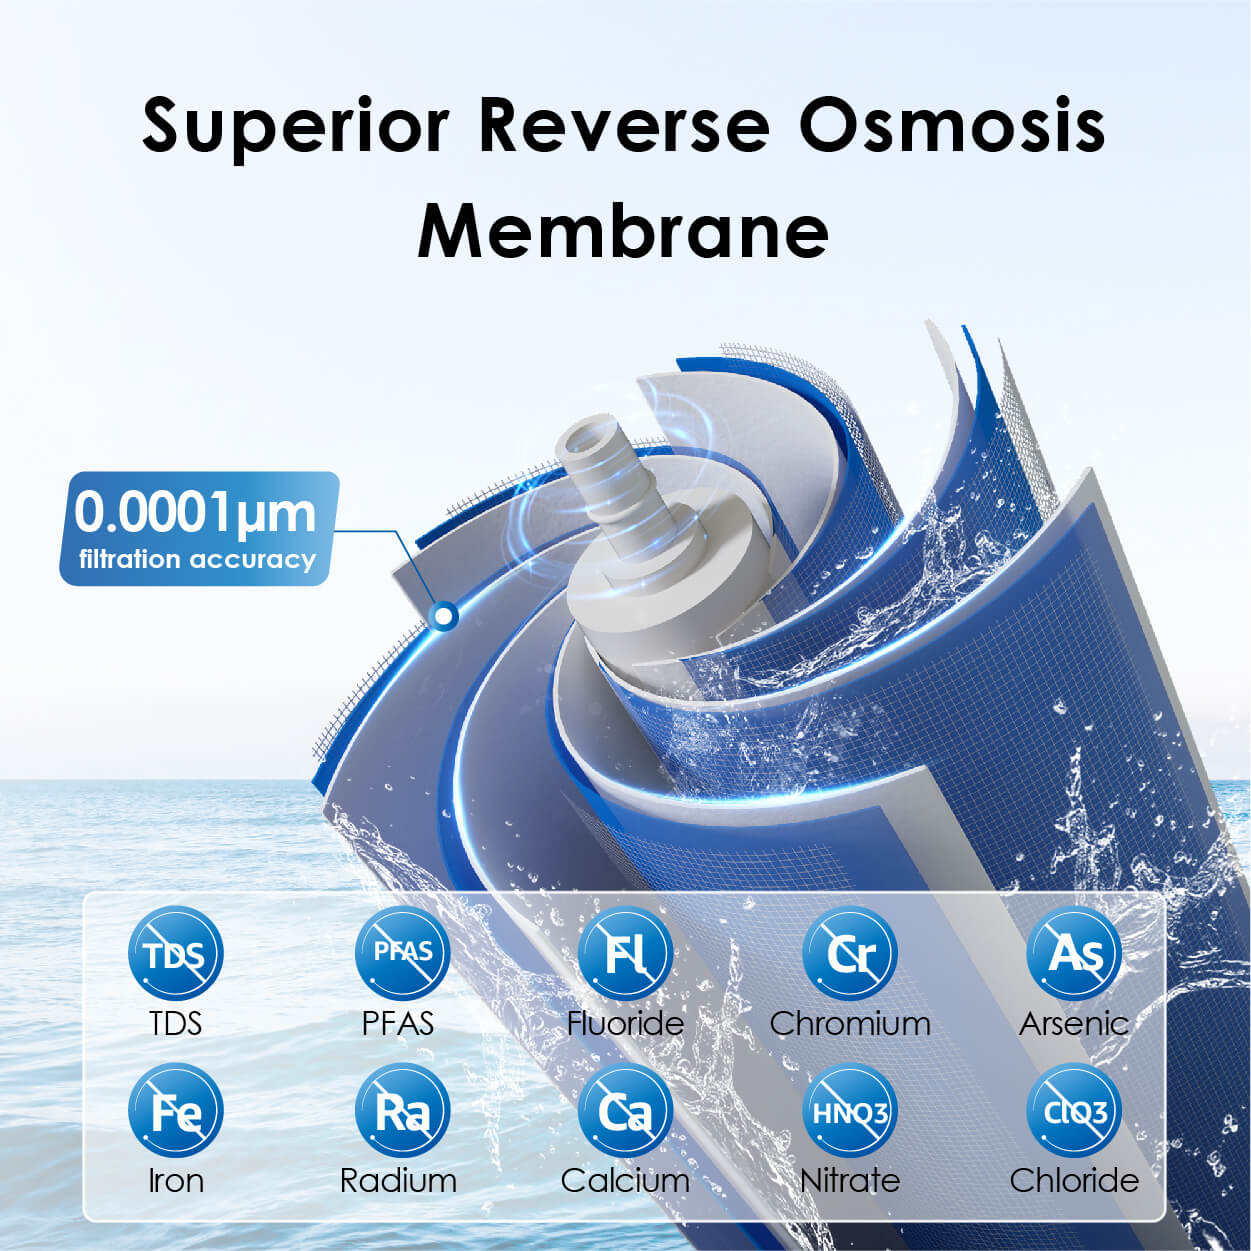 Superior Reverse Osmosis Membrane